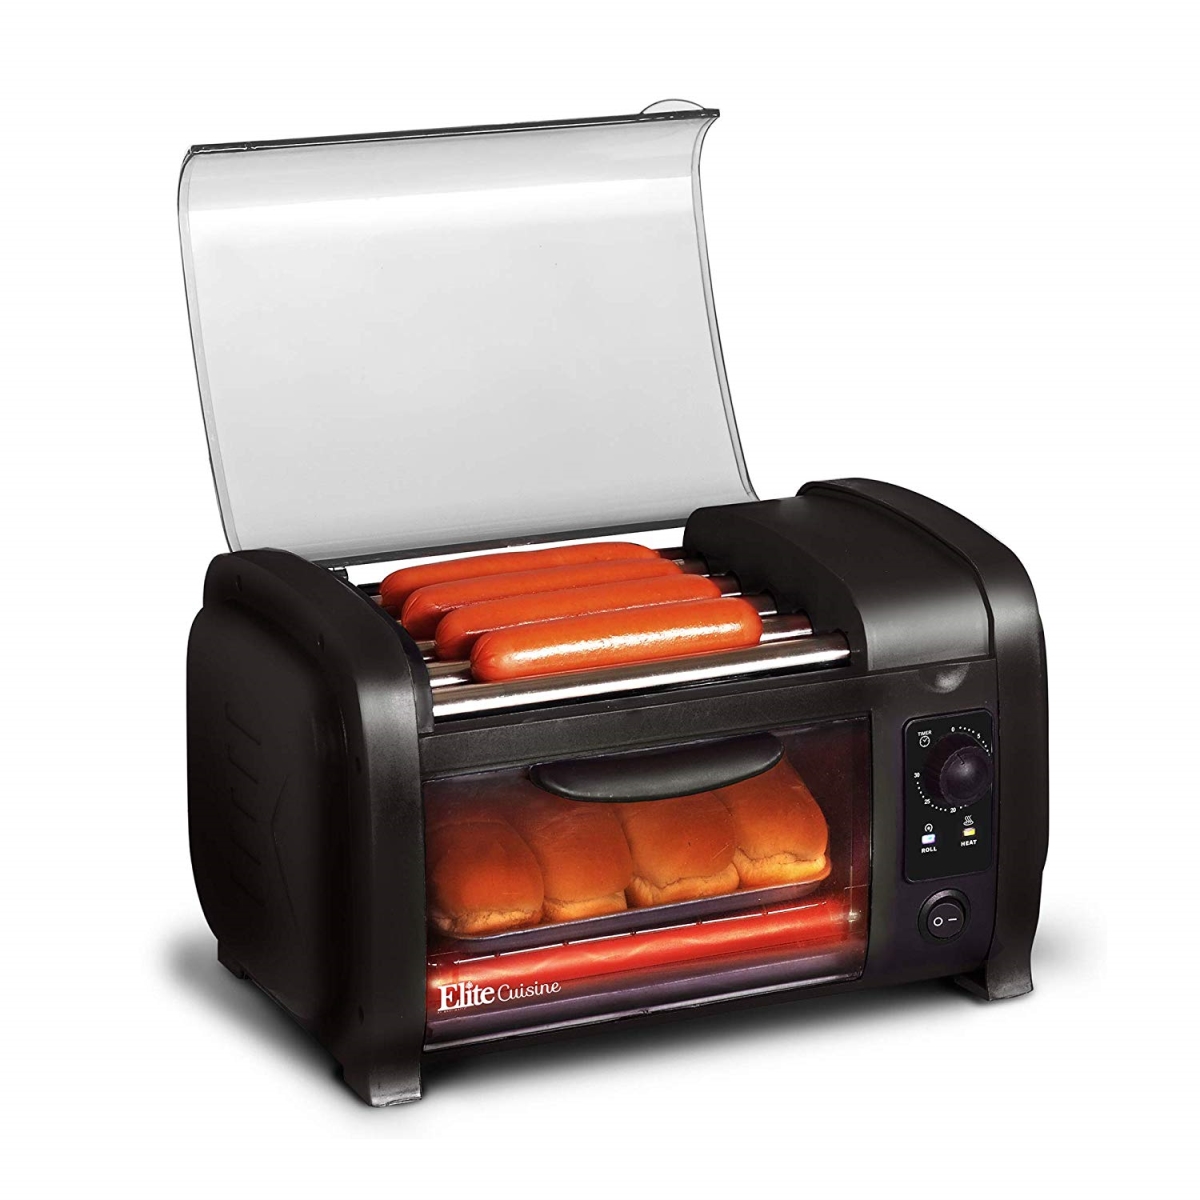 Ehd-051b Elite Cuisine Hot Dog Roller Toaster Oven - Black